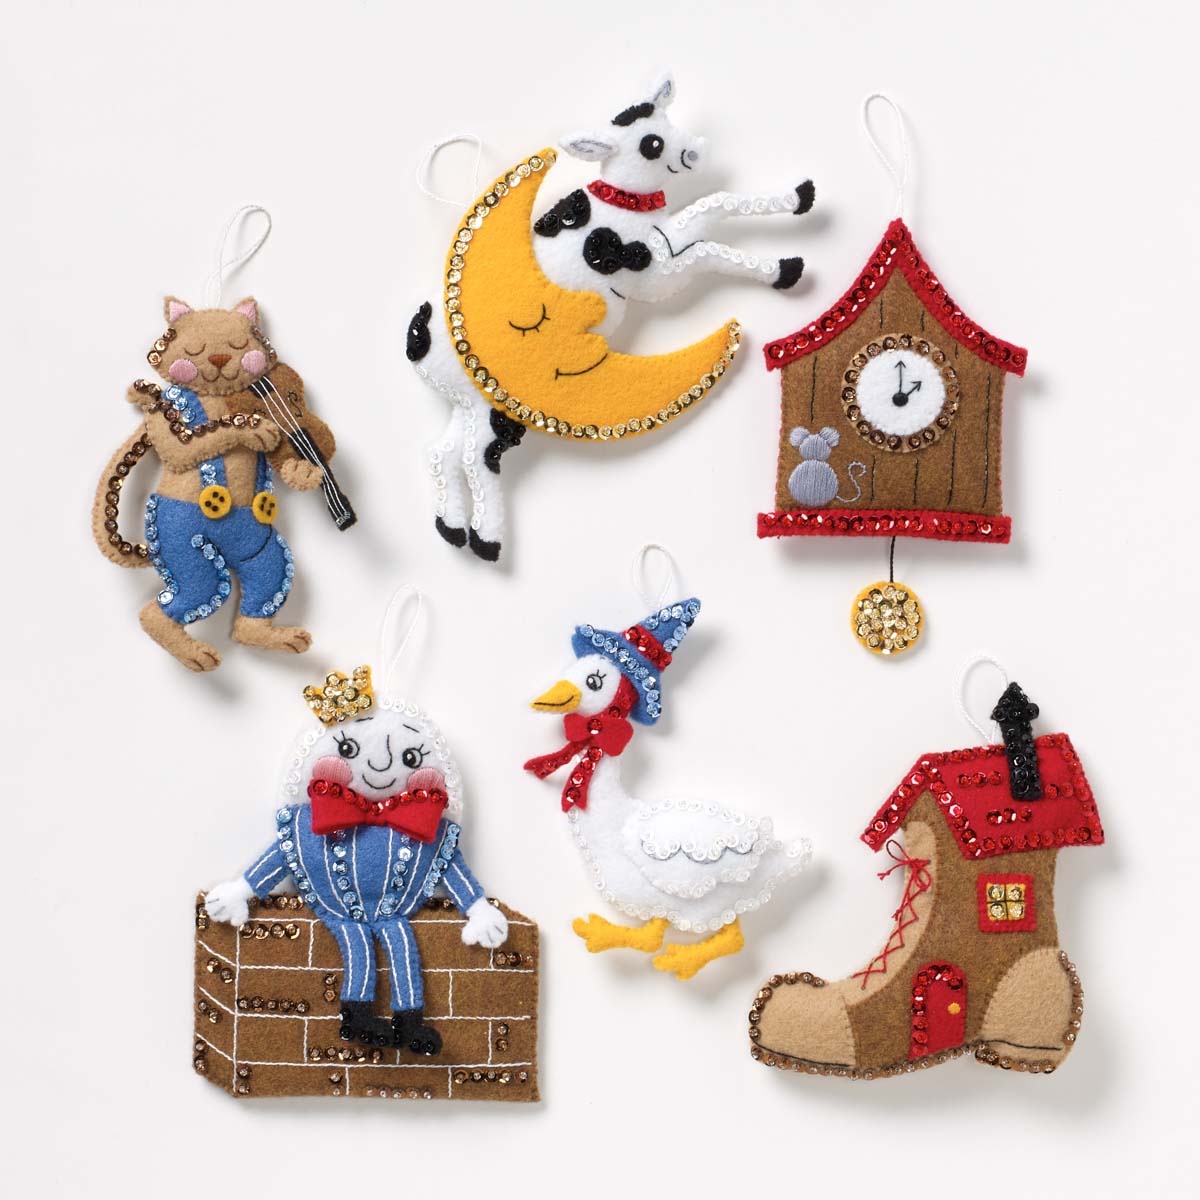 Bucilla ® Seasonal - Felt - Ornament Kits - Nursery Rhyme - 89451E